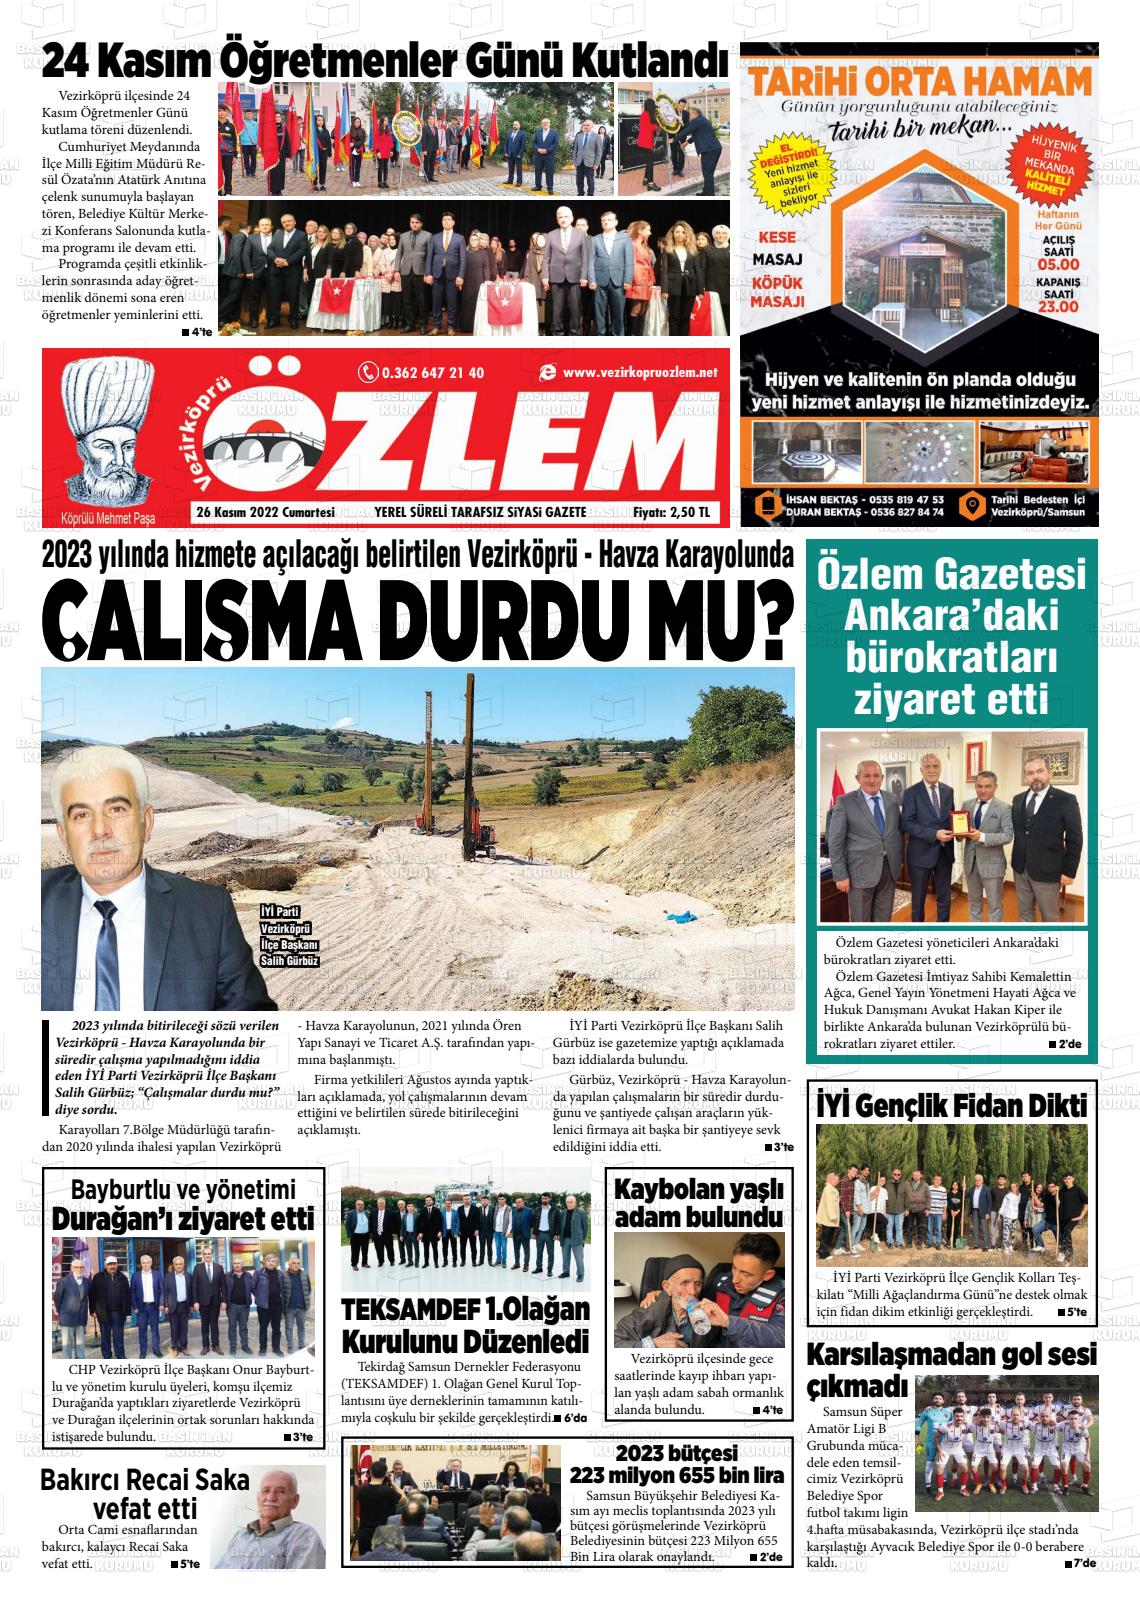 26 Kasım 2022 Vezirköprü Özlem Gazete Manşeti